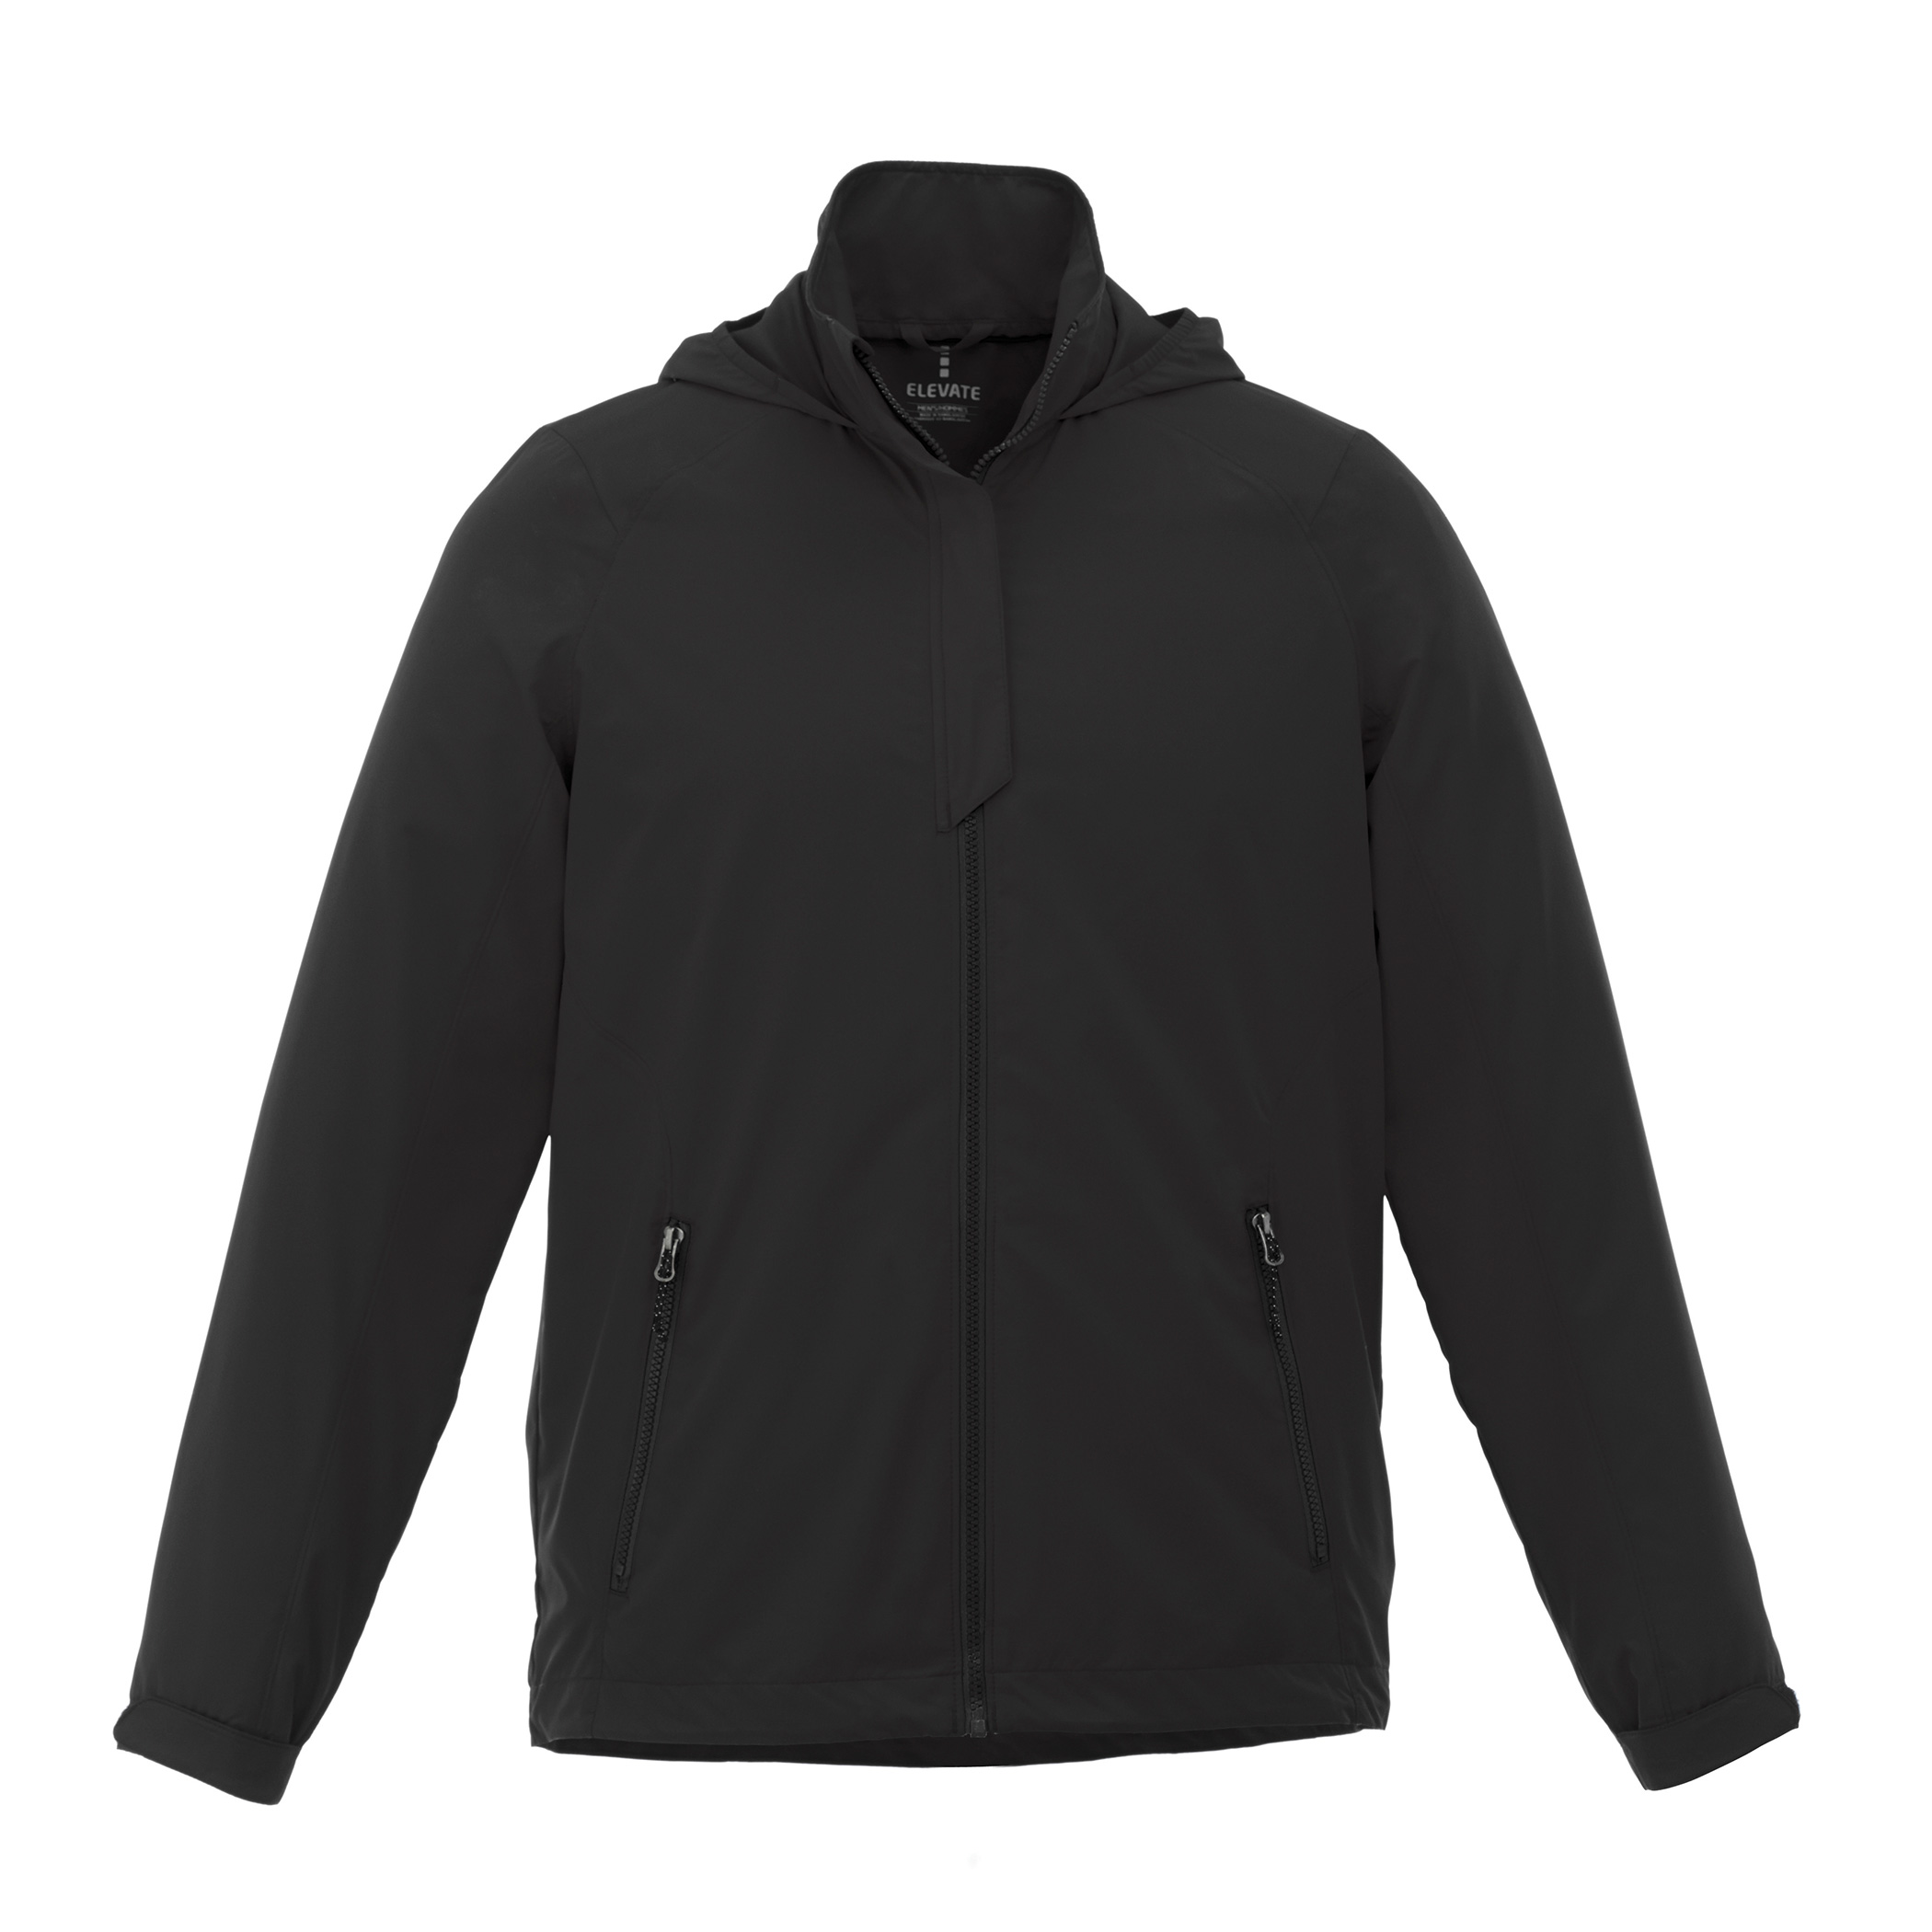 M-KARULA Lightweight Jacket | Trimark Sportswear